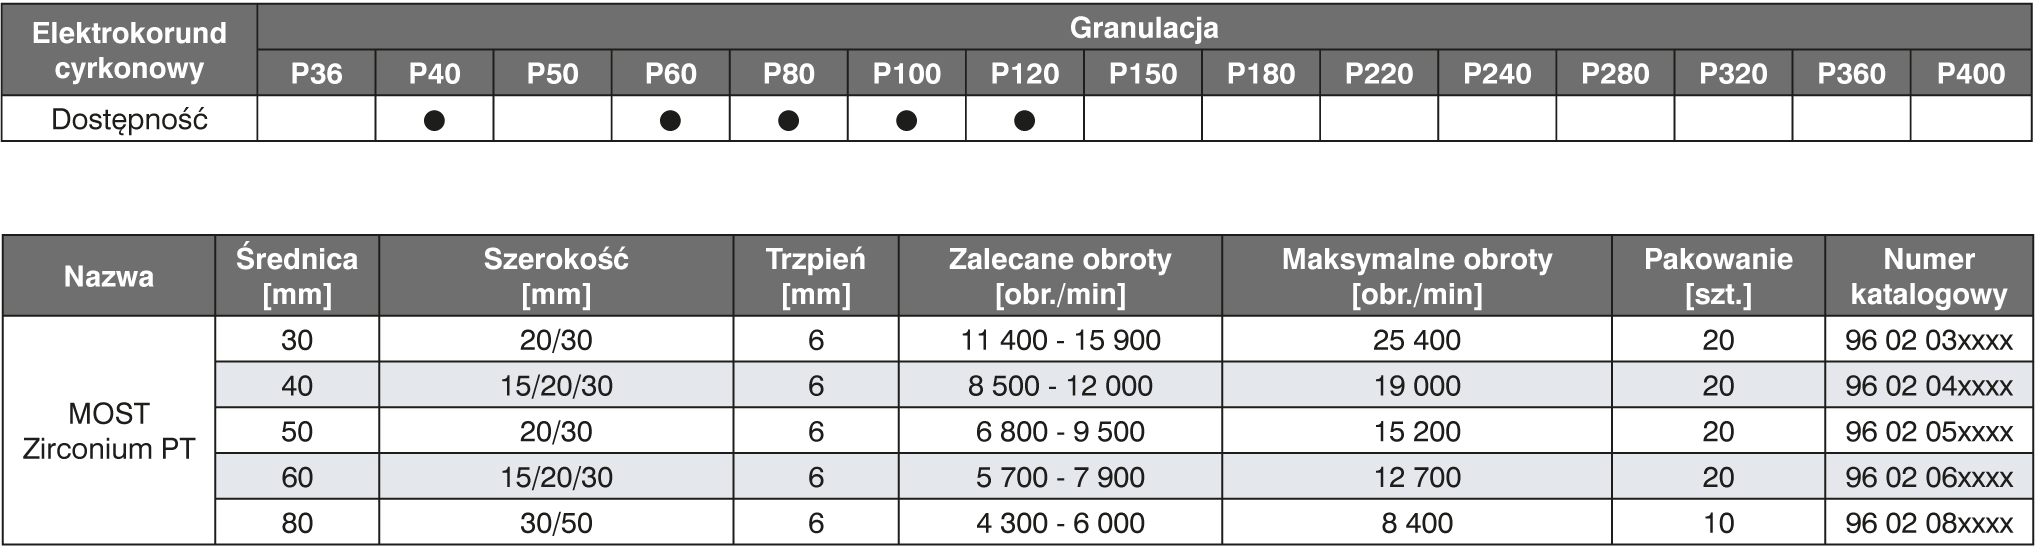 MOST Zirconium PT tabela